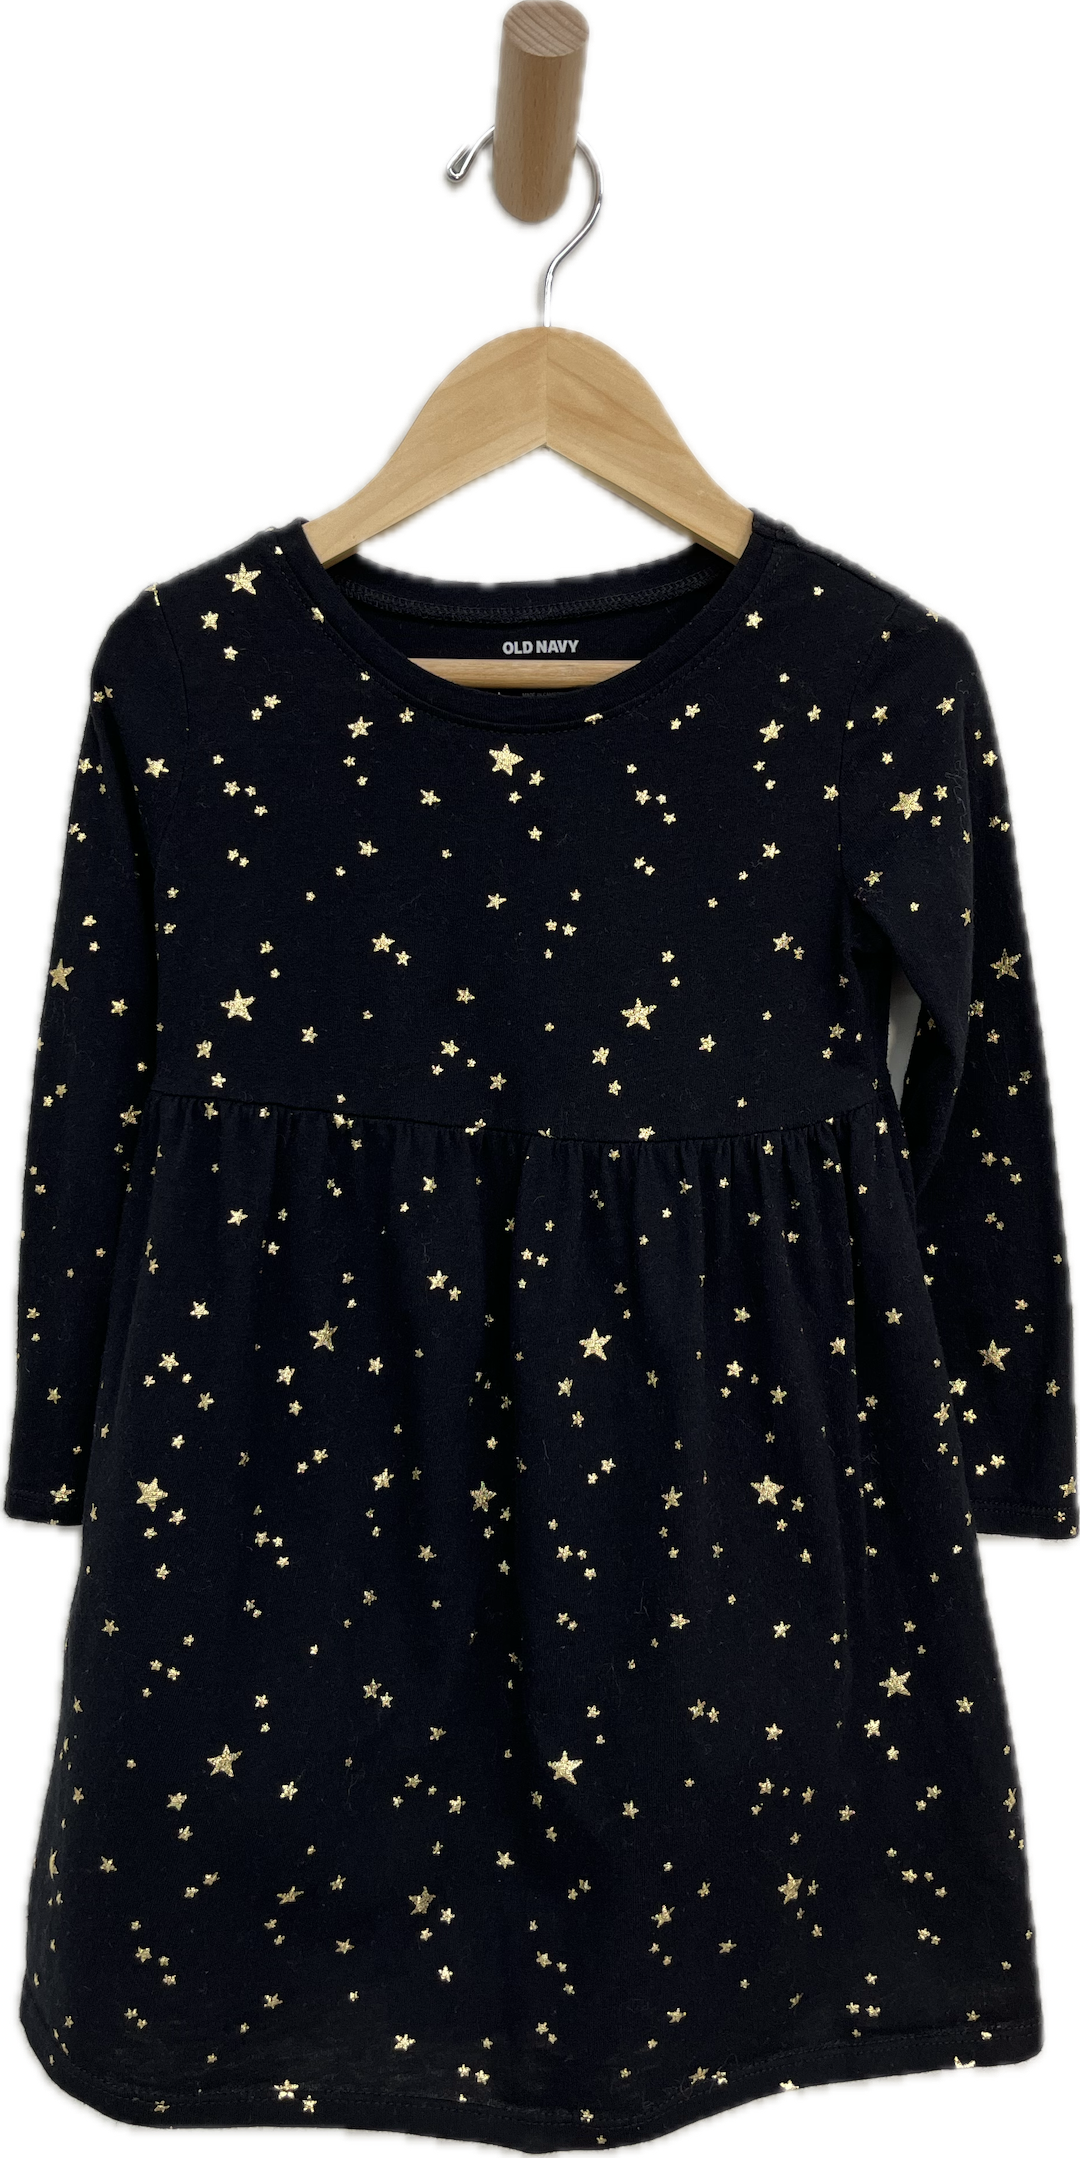 old navy cotton dress black gold stars 4T